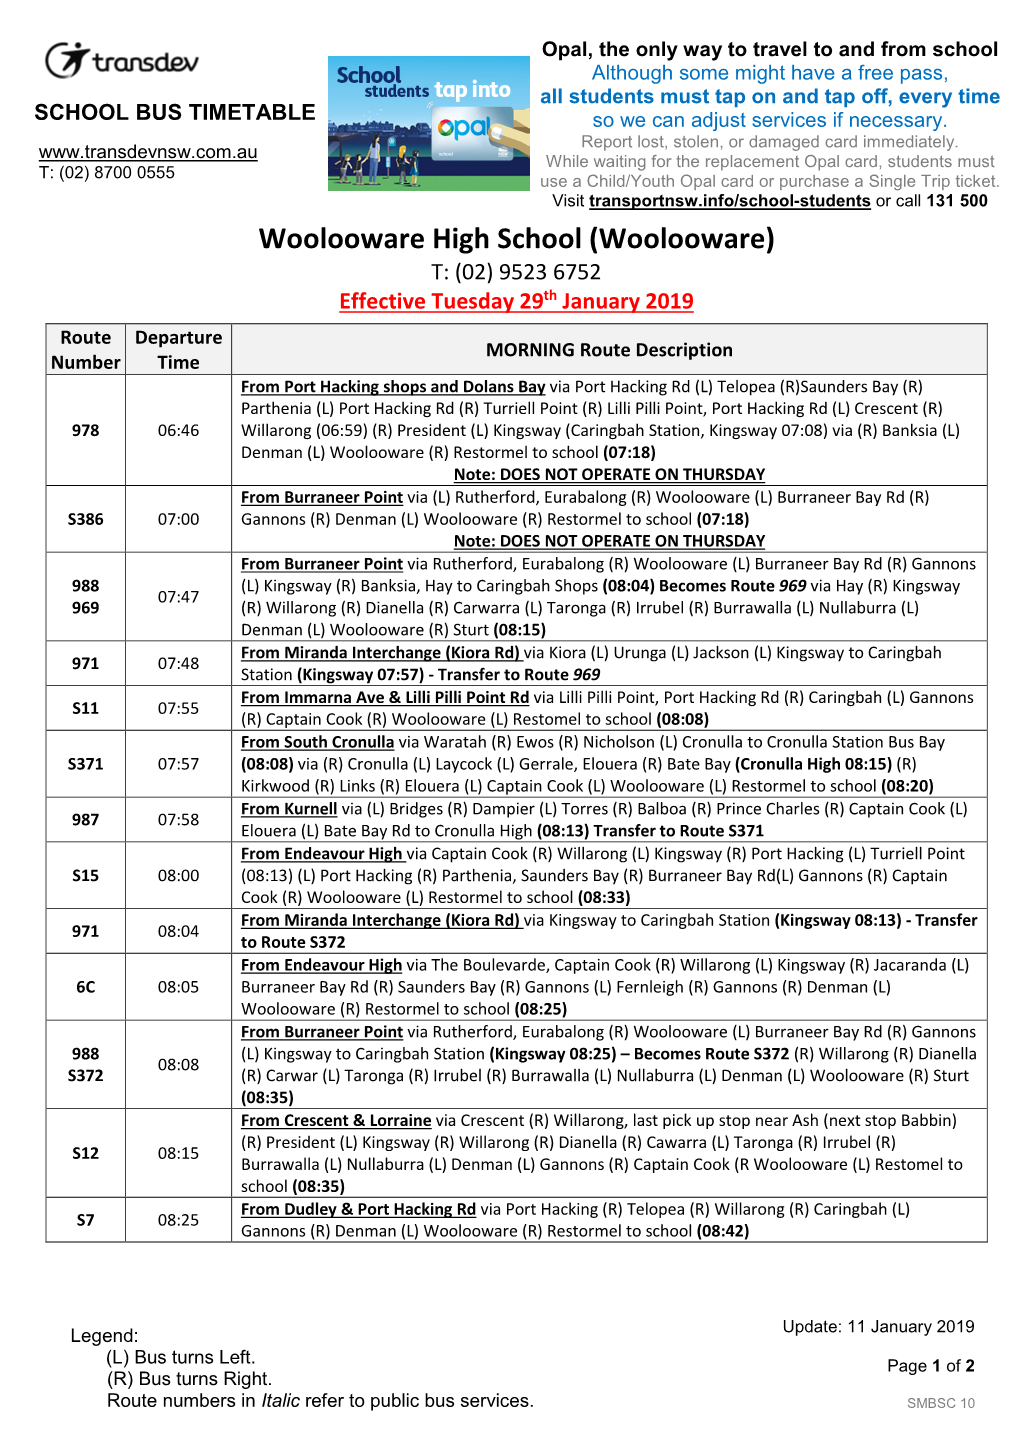 Woolooware High School (Woolooware) T: (02) 9523 6752 Effective Tuesday 29Th January 2019